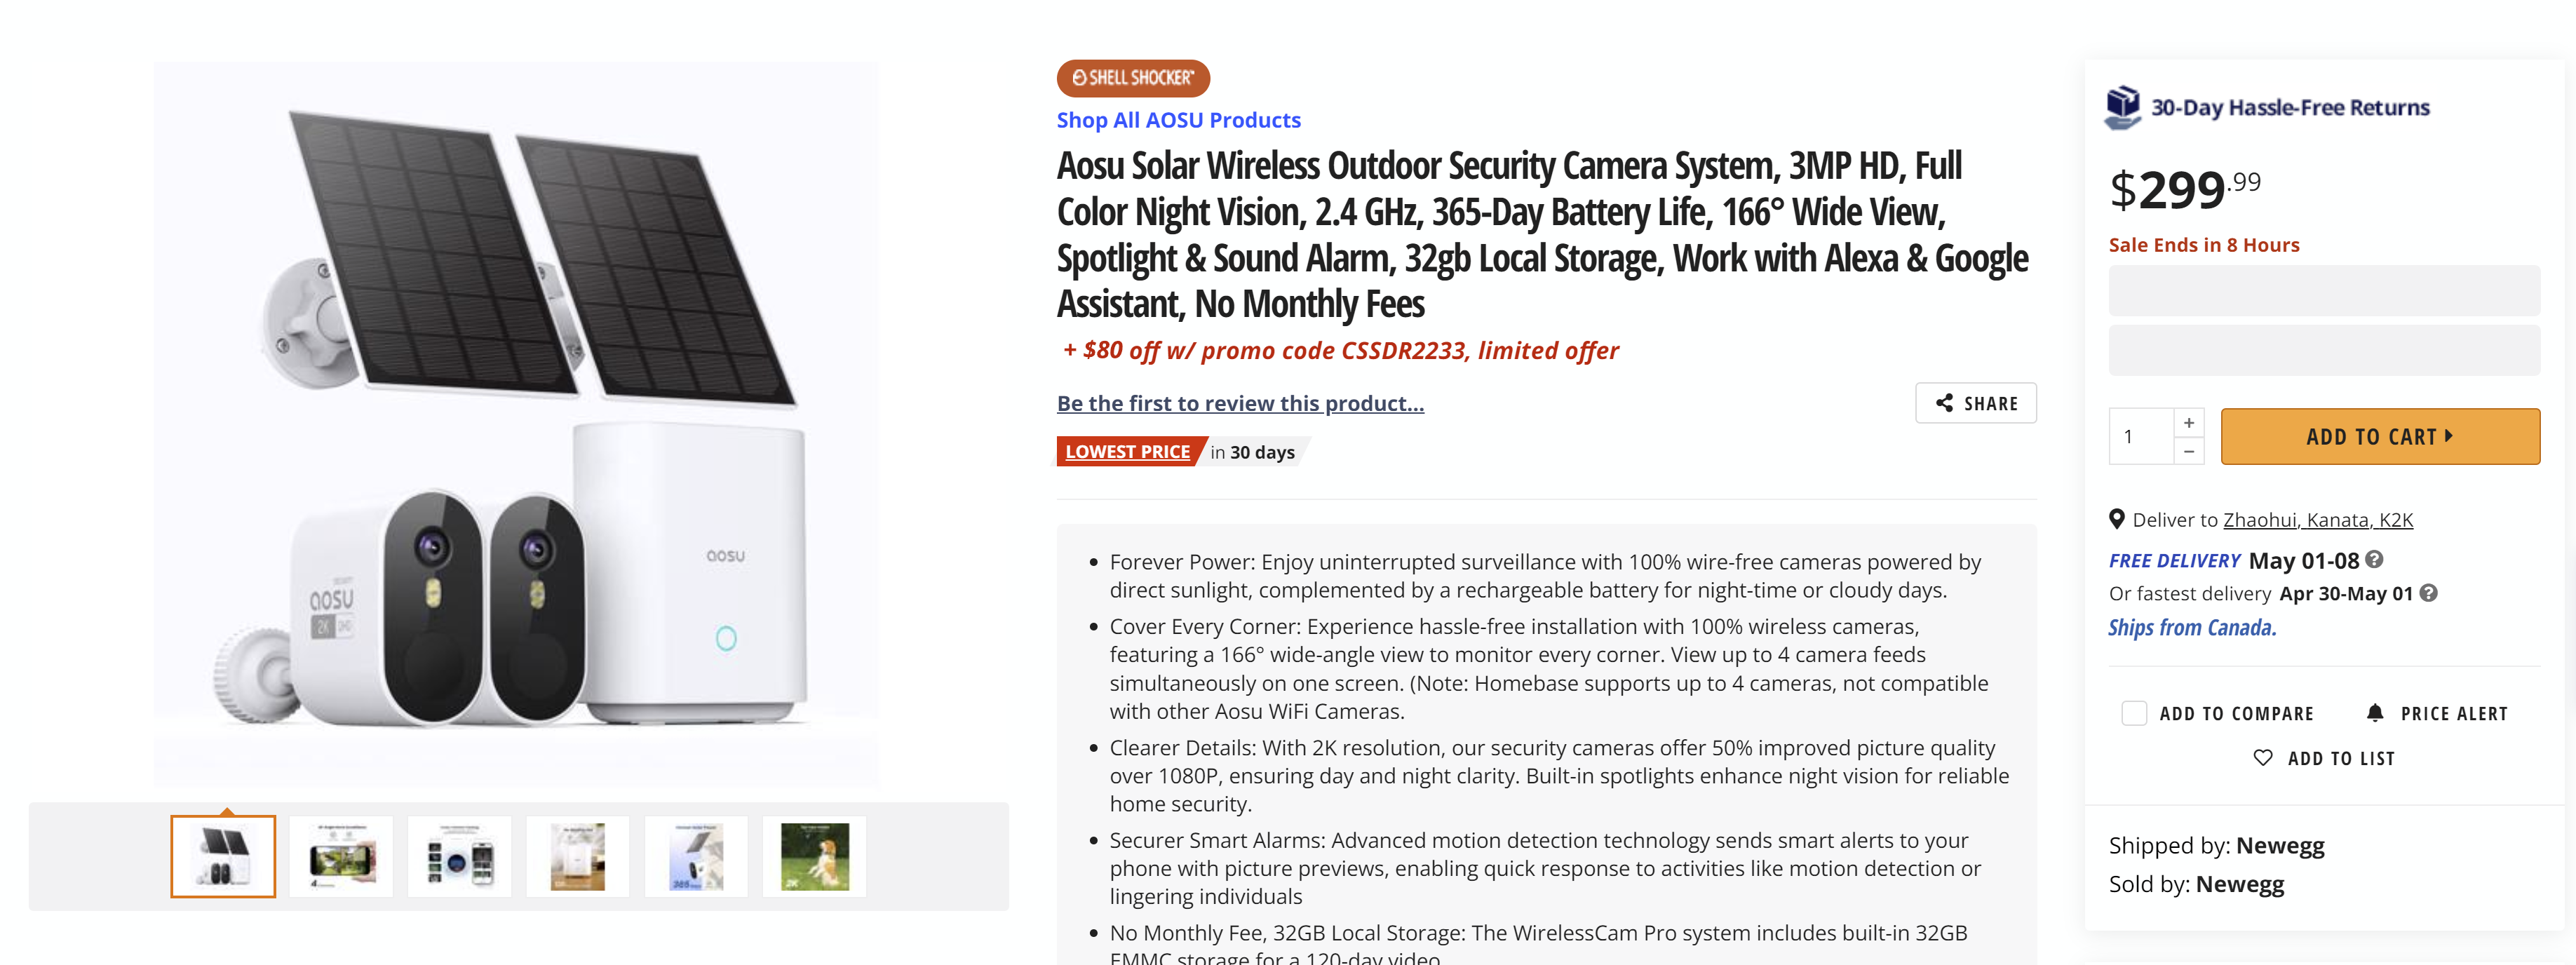 Aosu Solar Wireless Outdoor Security Camera System